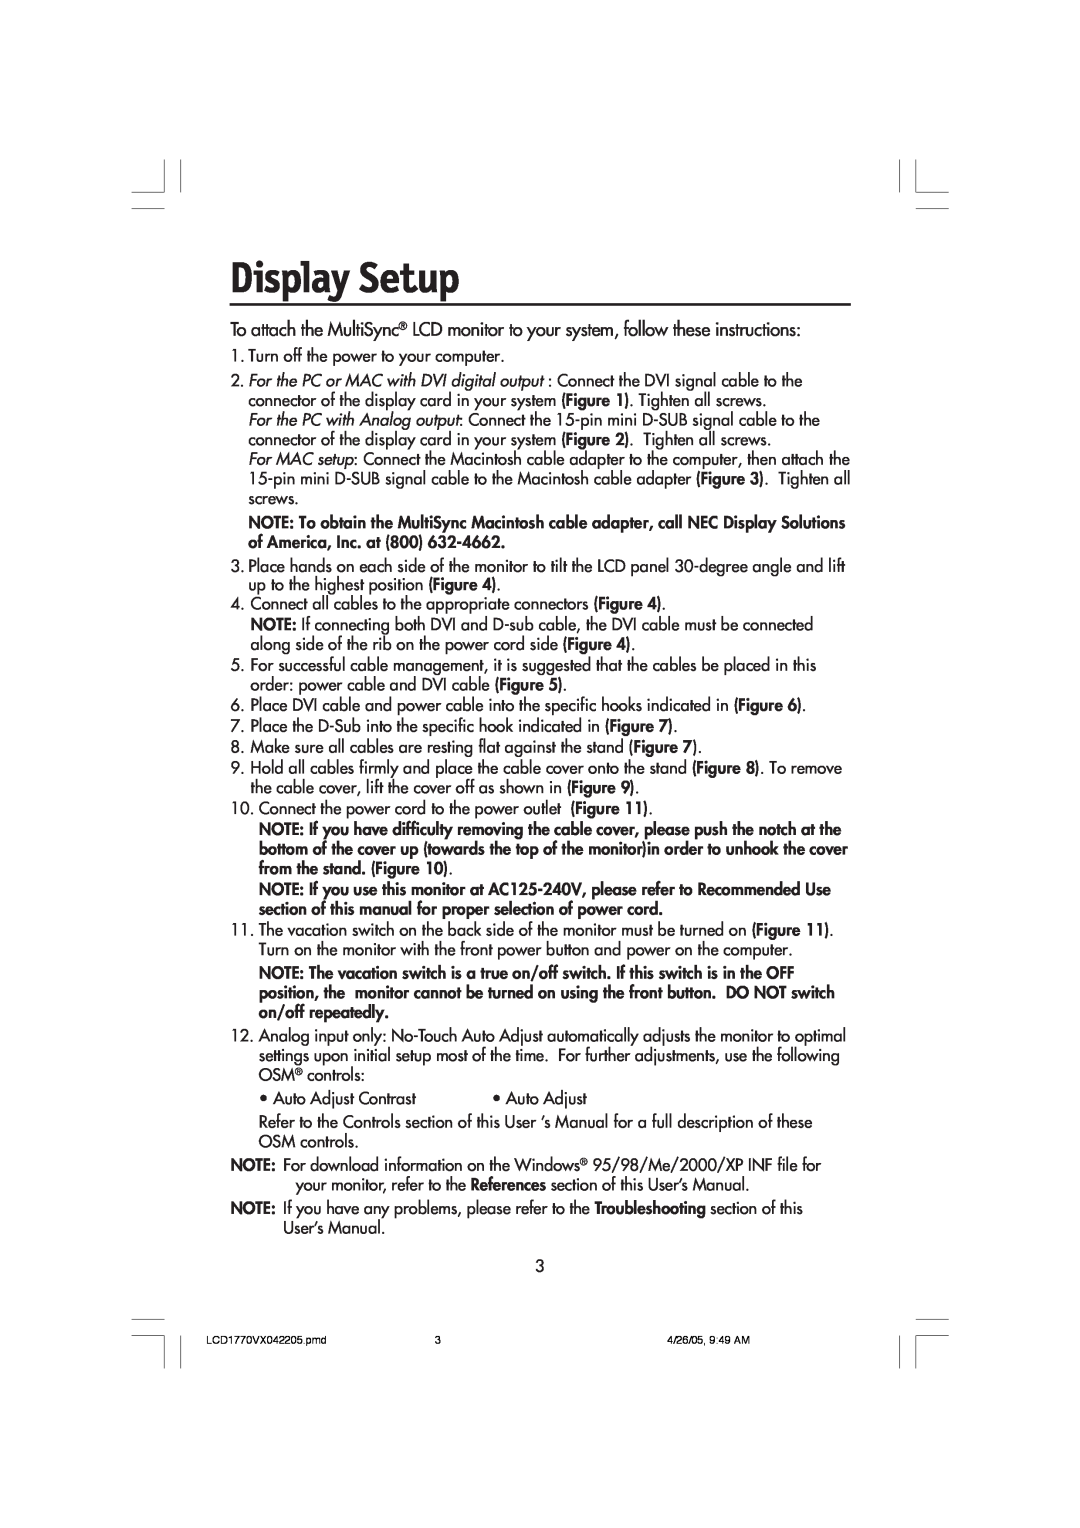 NEC LCD1770VX user manual Display Setup 